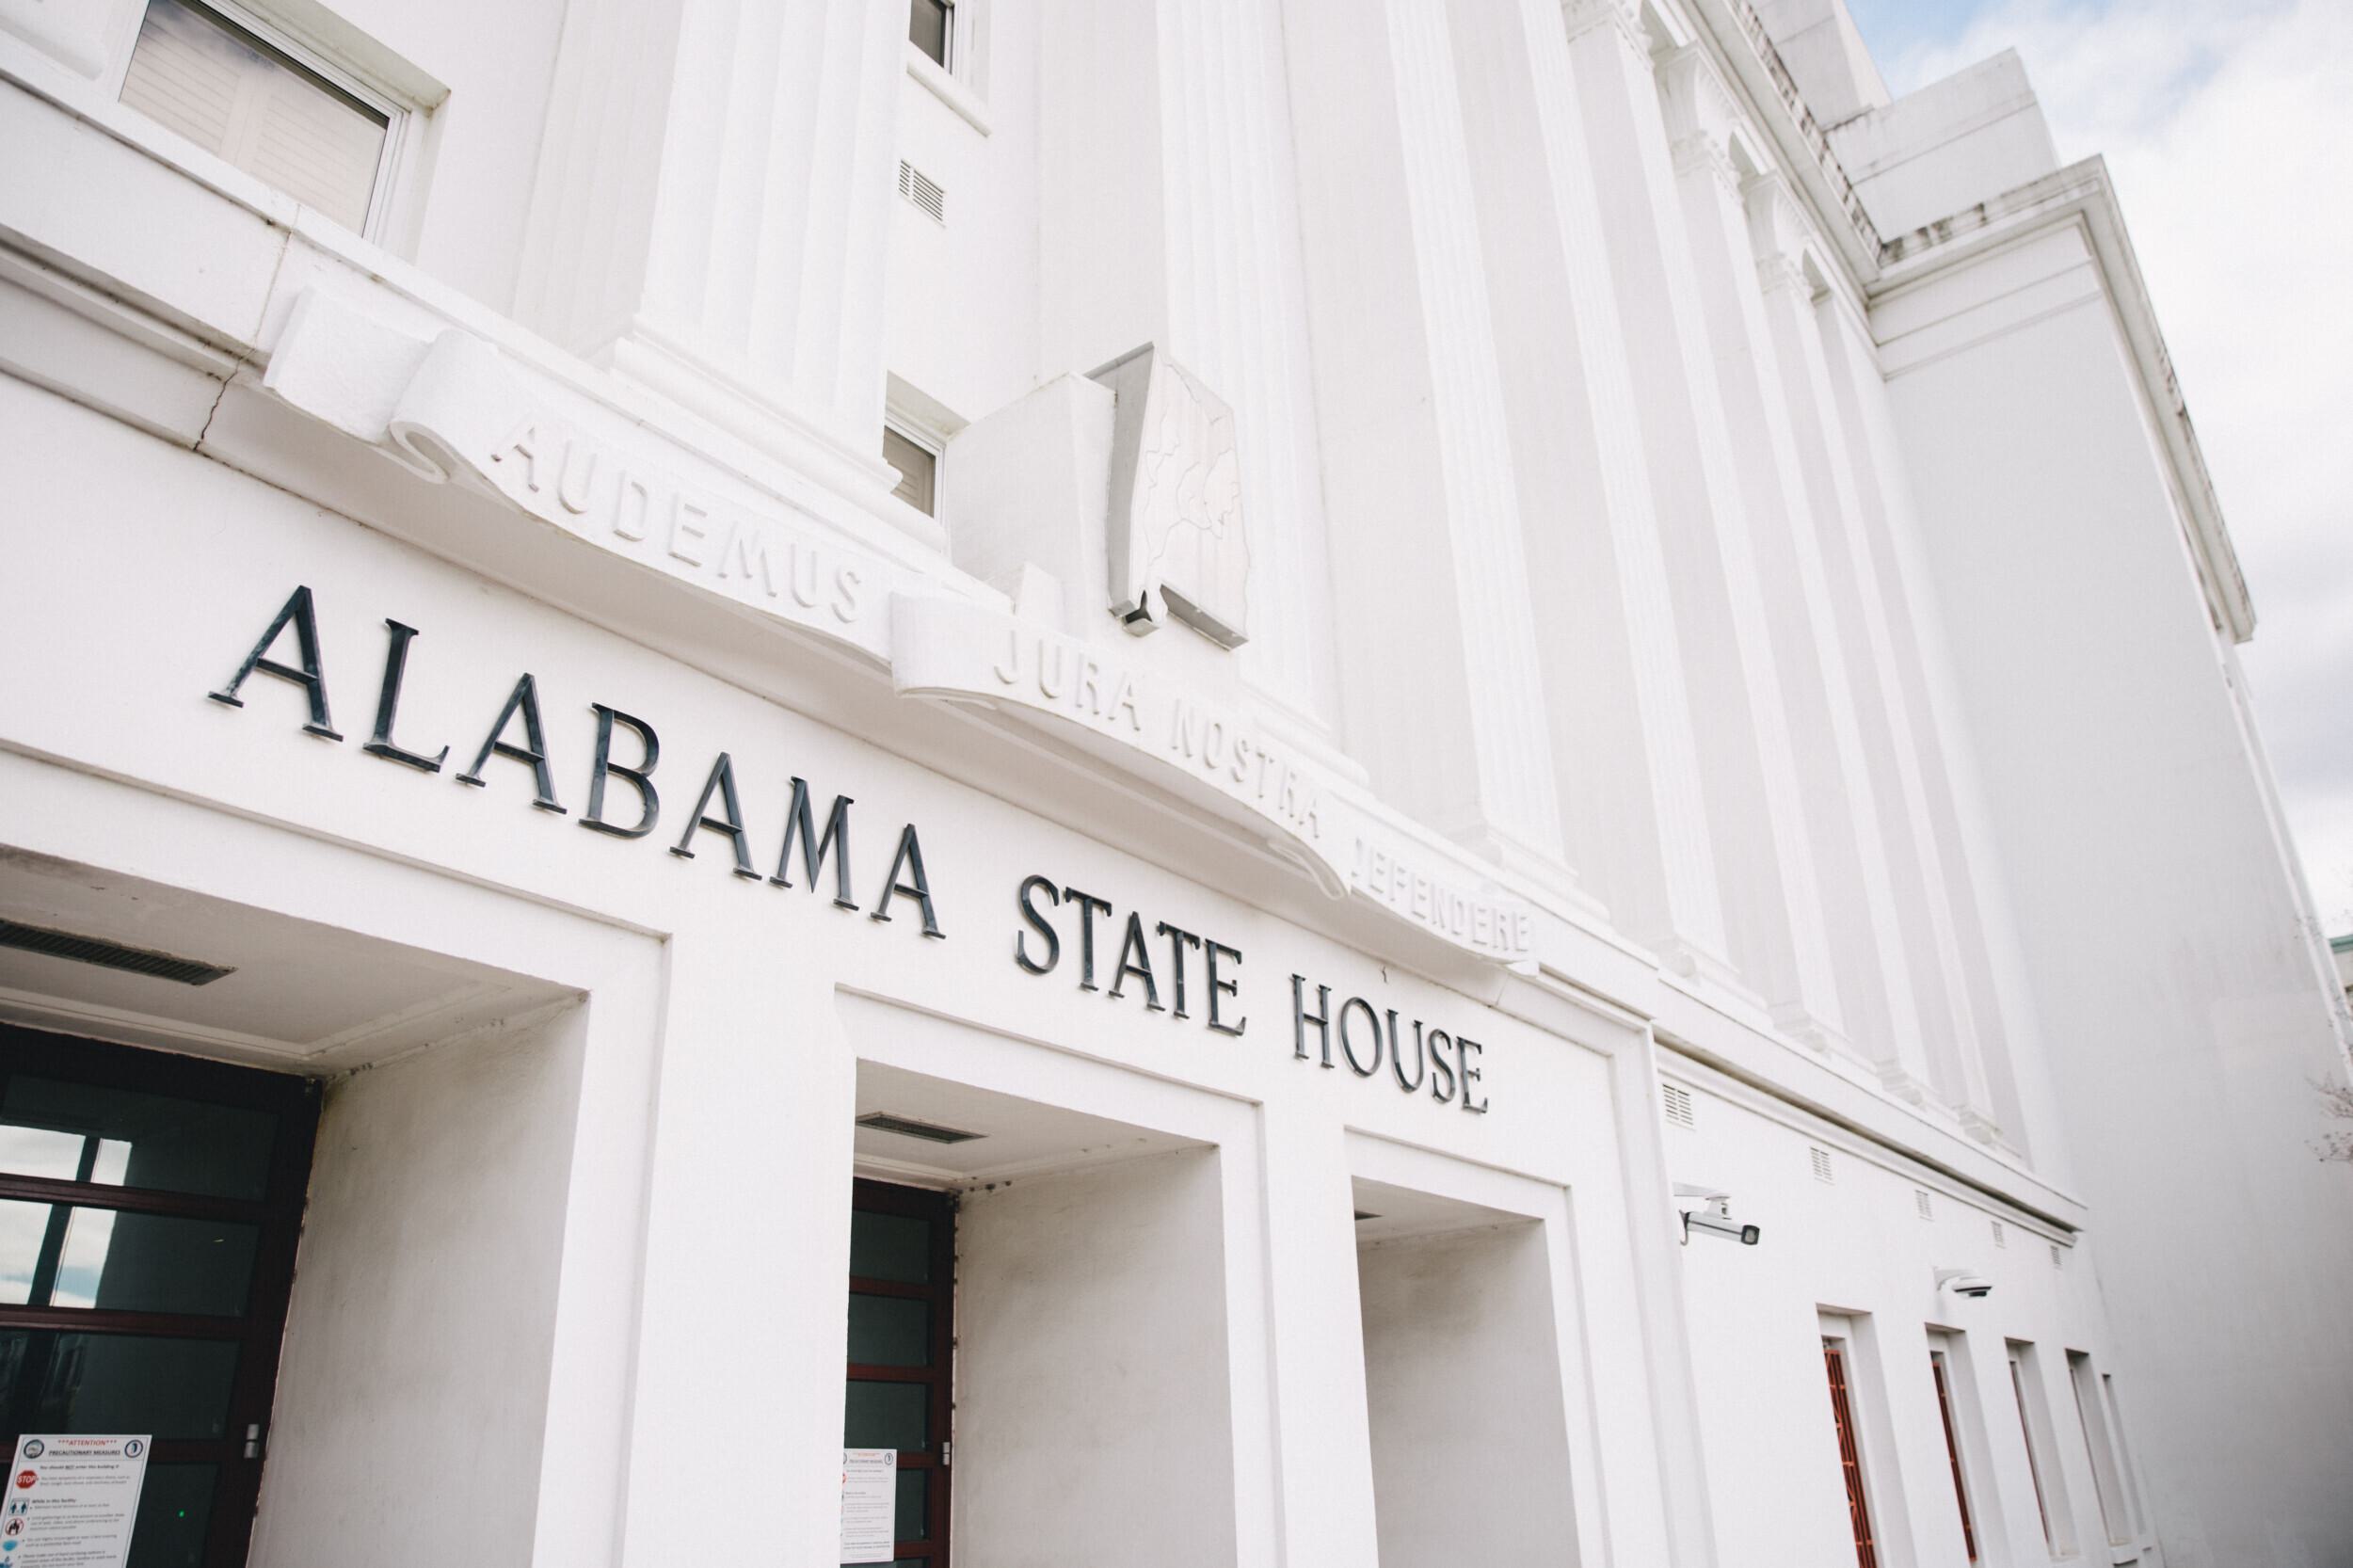 Alabama state house